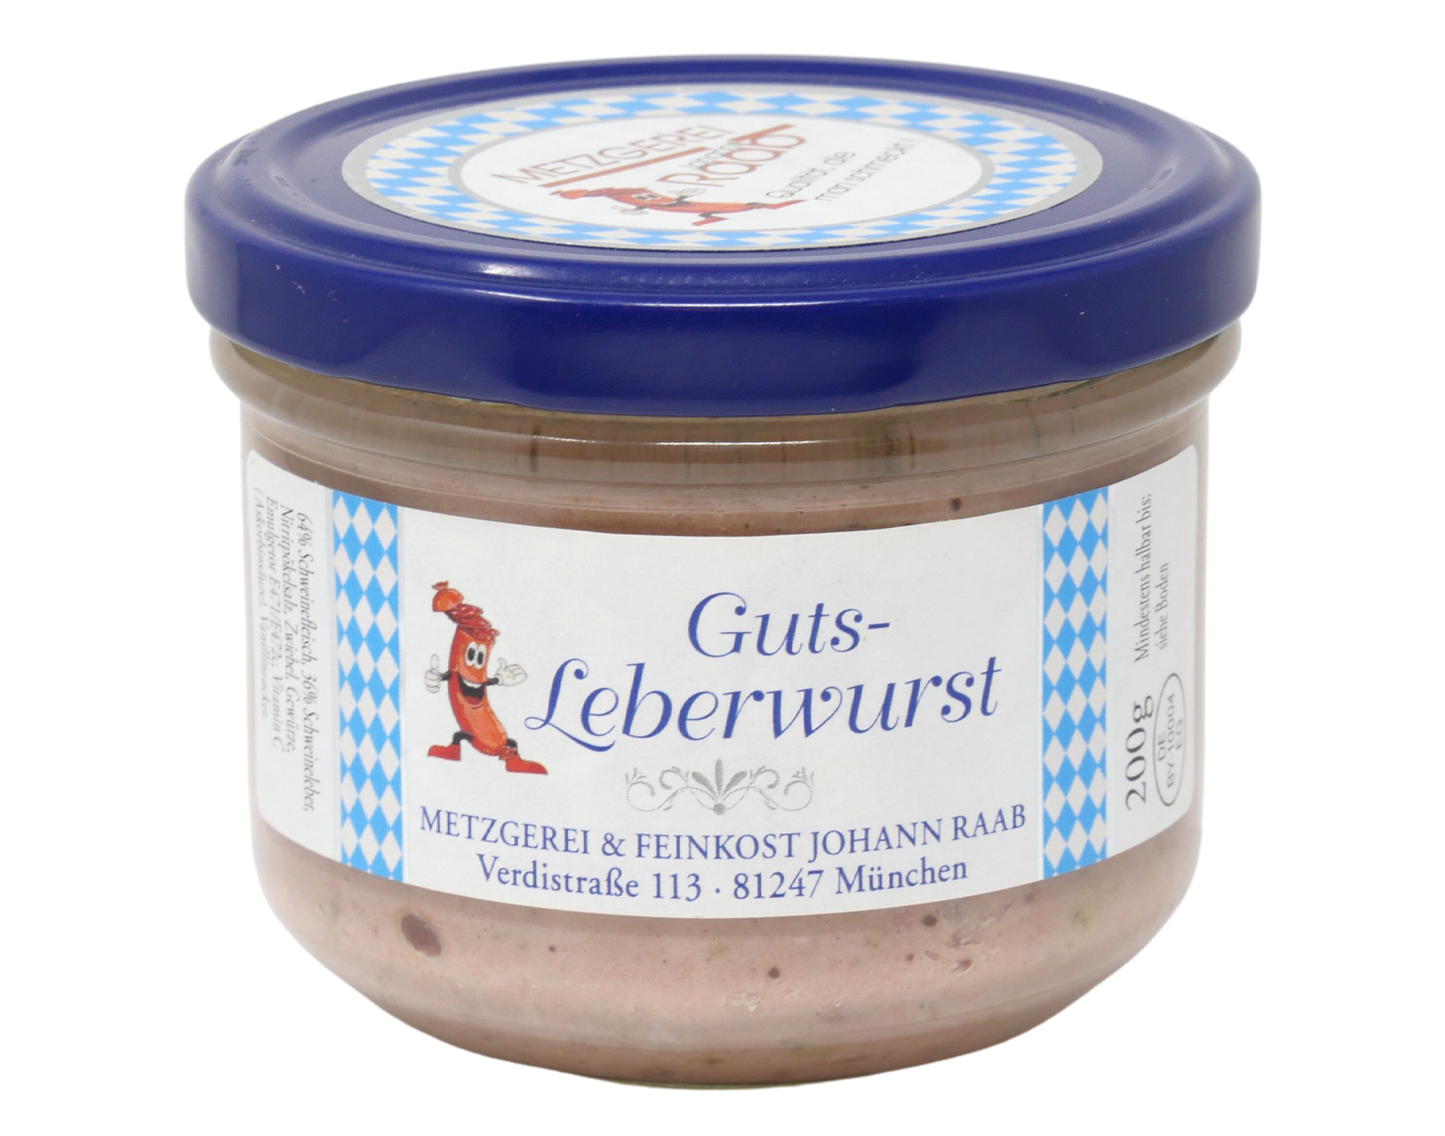 Guts-Leberwurst